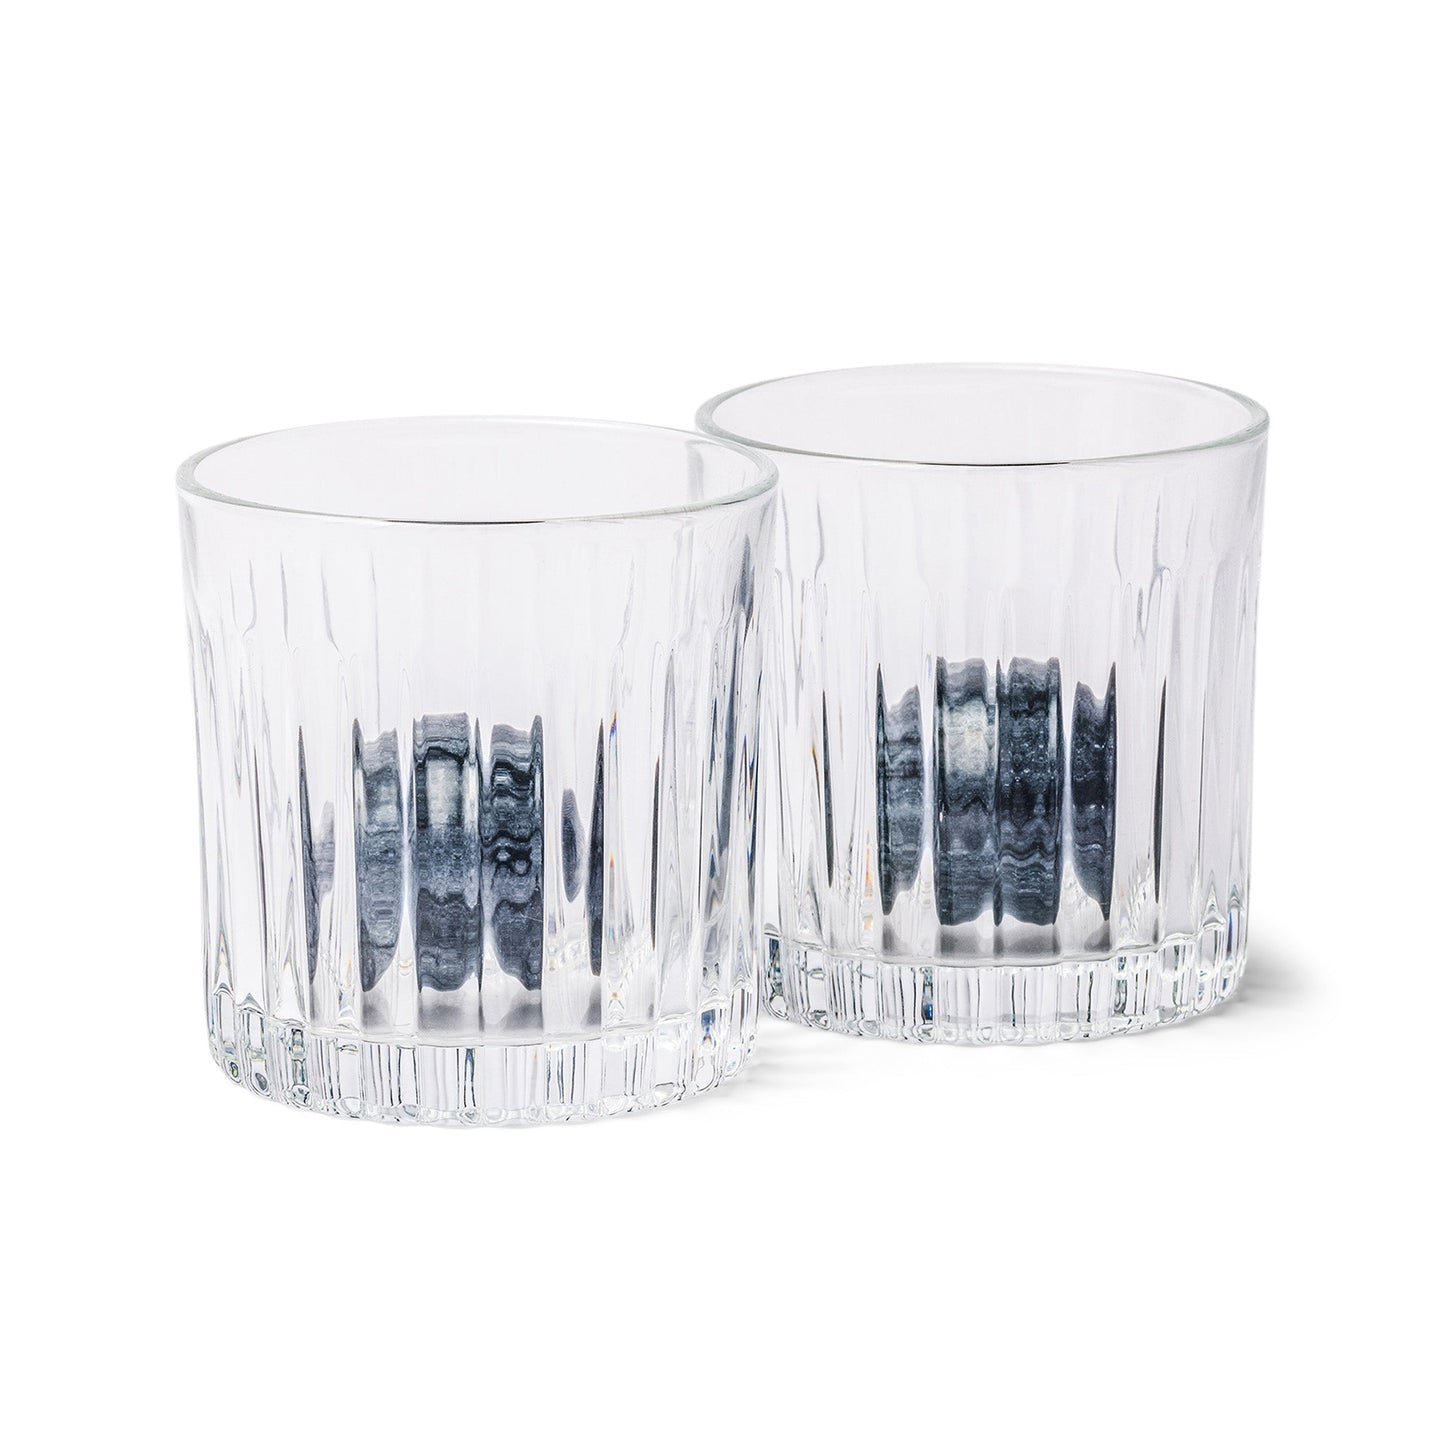 Gentlemen's Hardware Whiskey Tumbler Glasses & Ice Stones Set